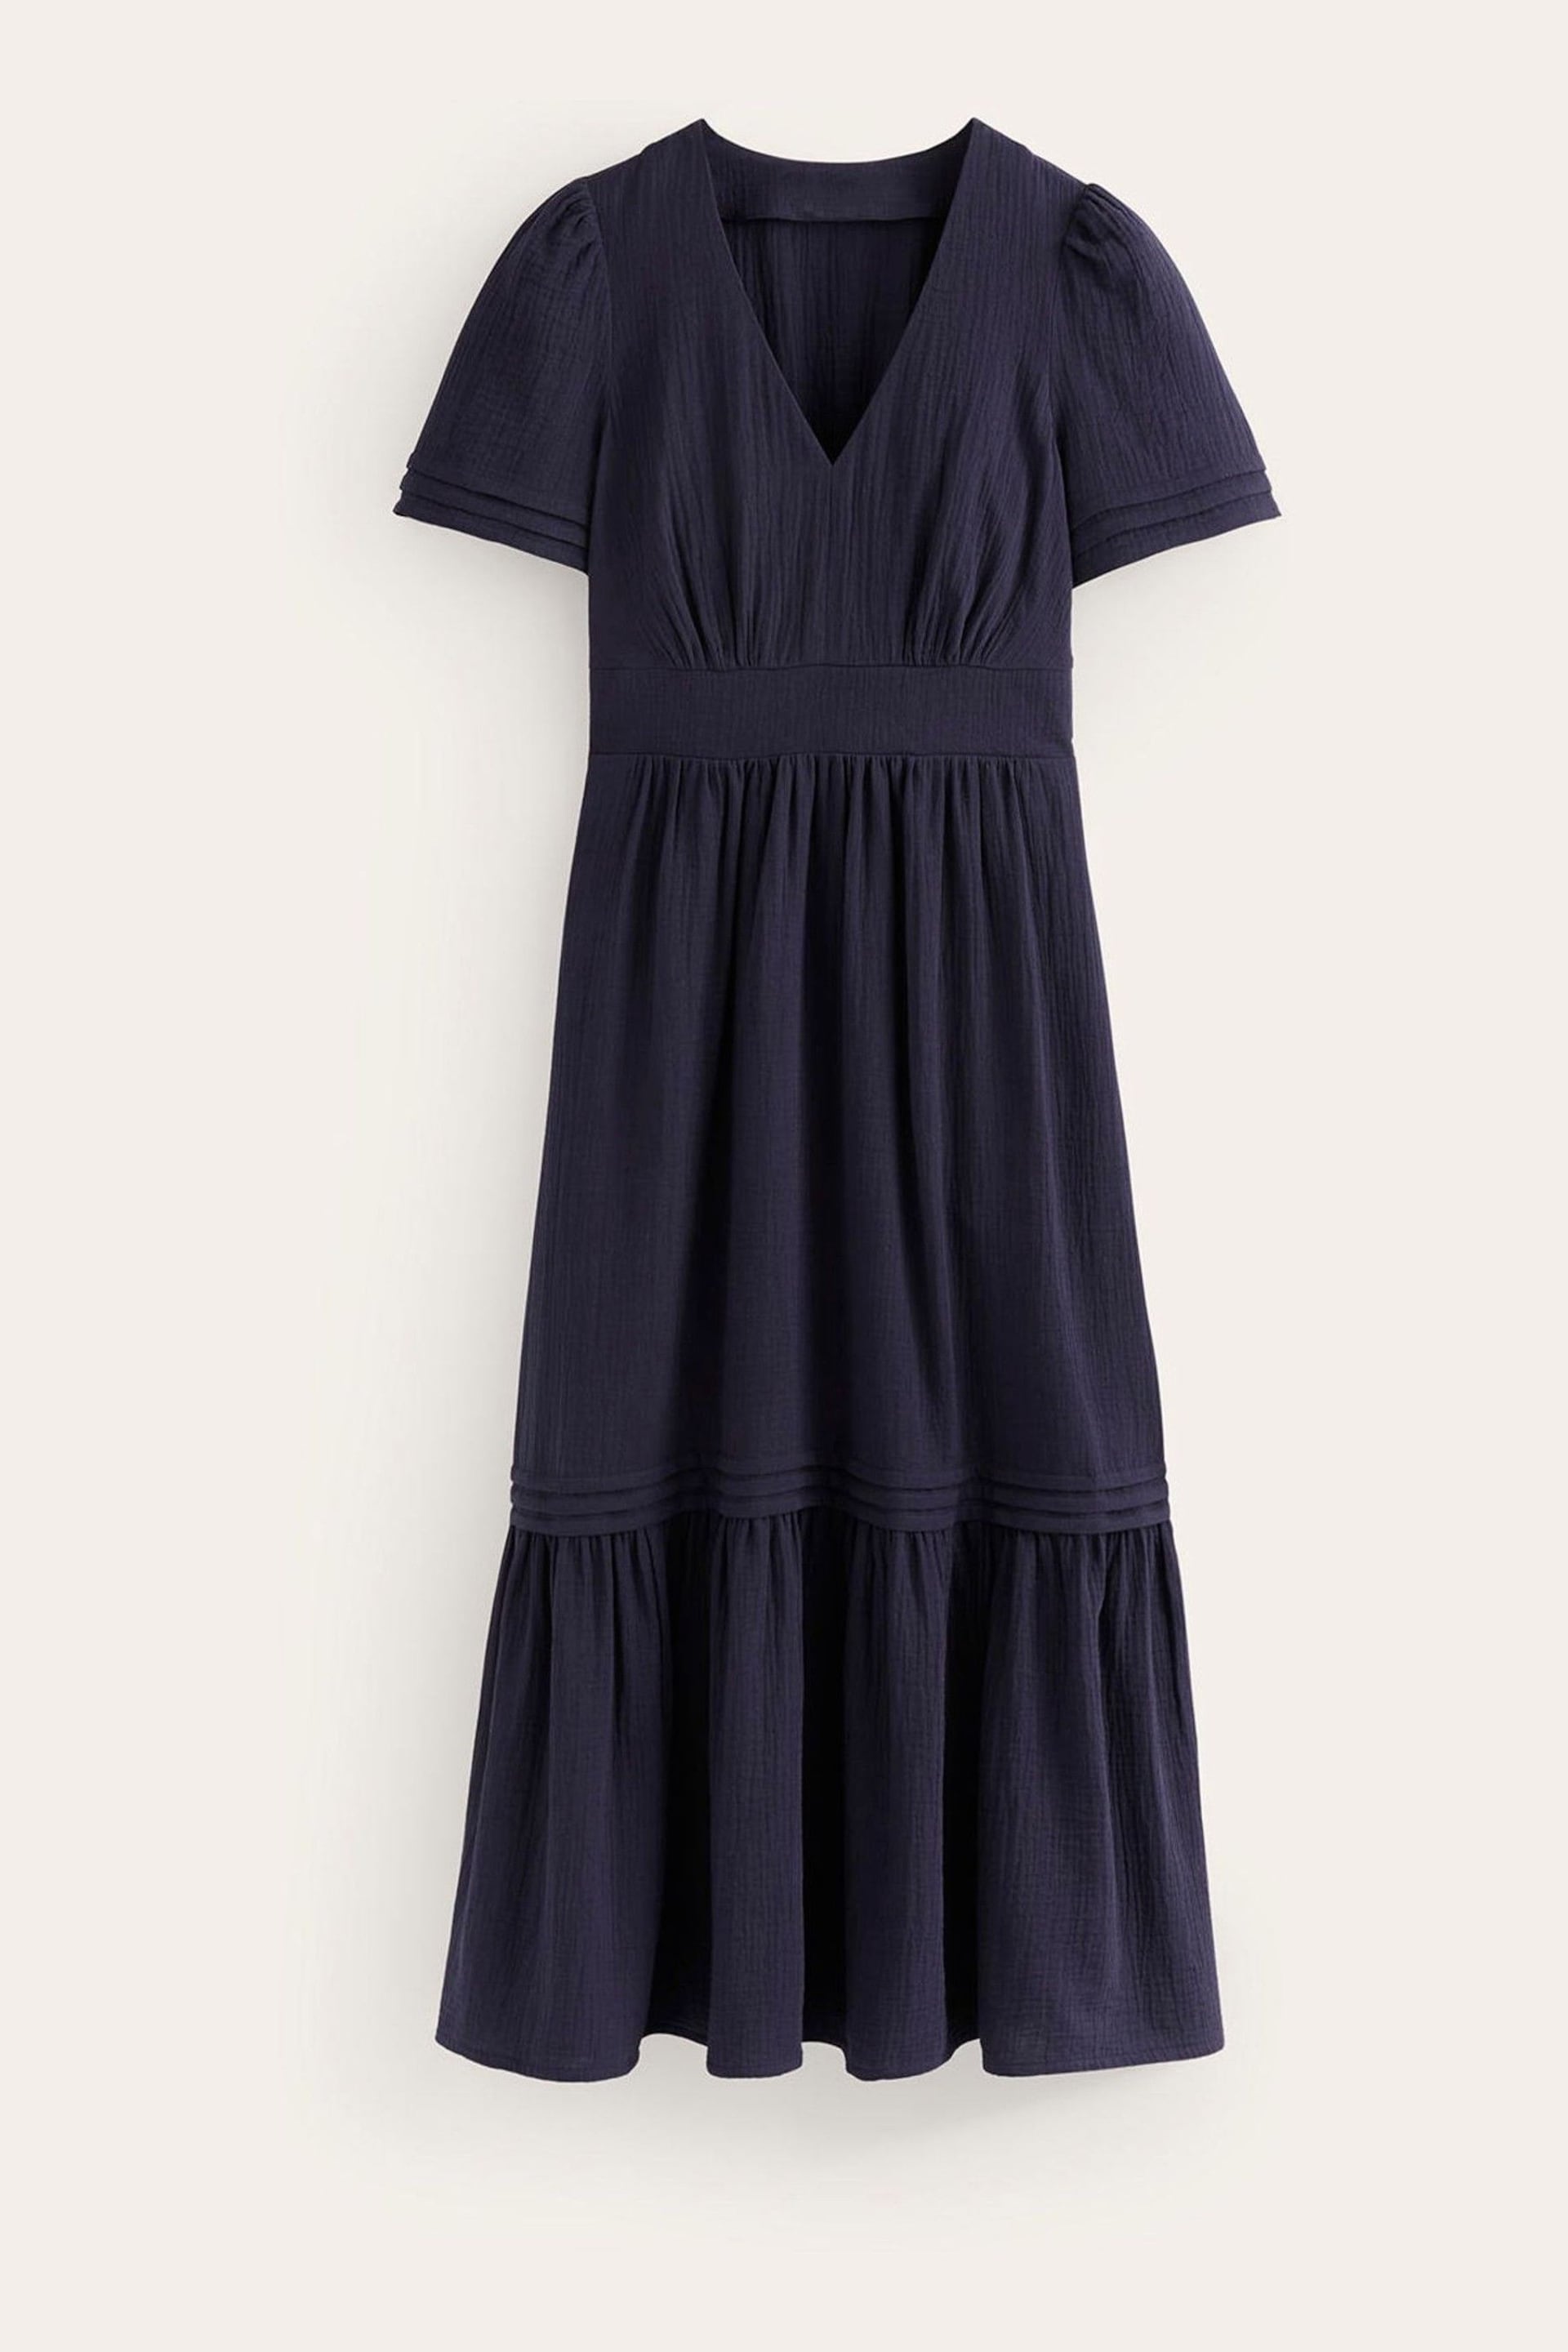 Boden Blue Petite Eve Double Cloth Midi Dress - Image 6 of 6